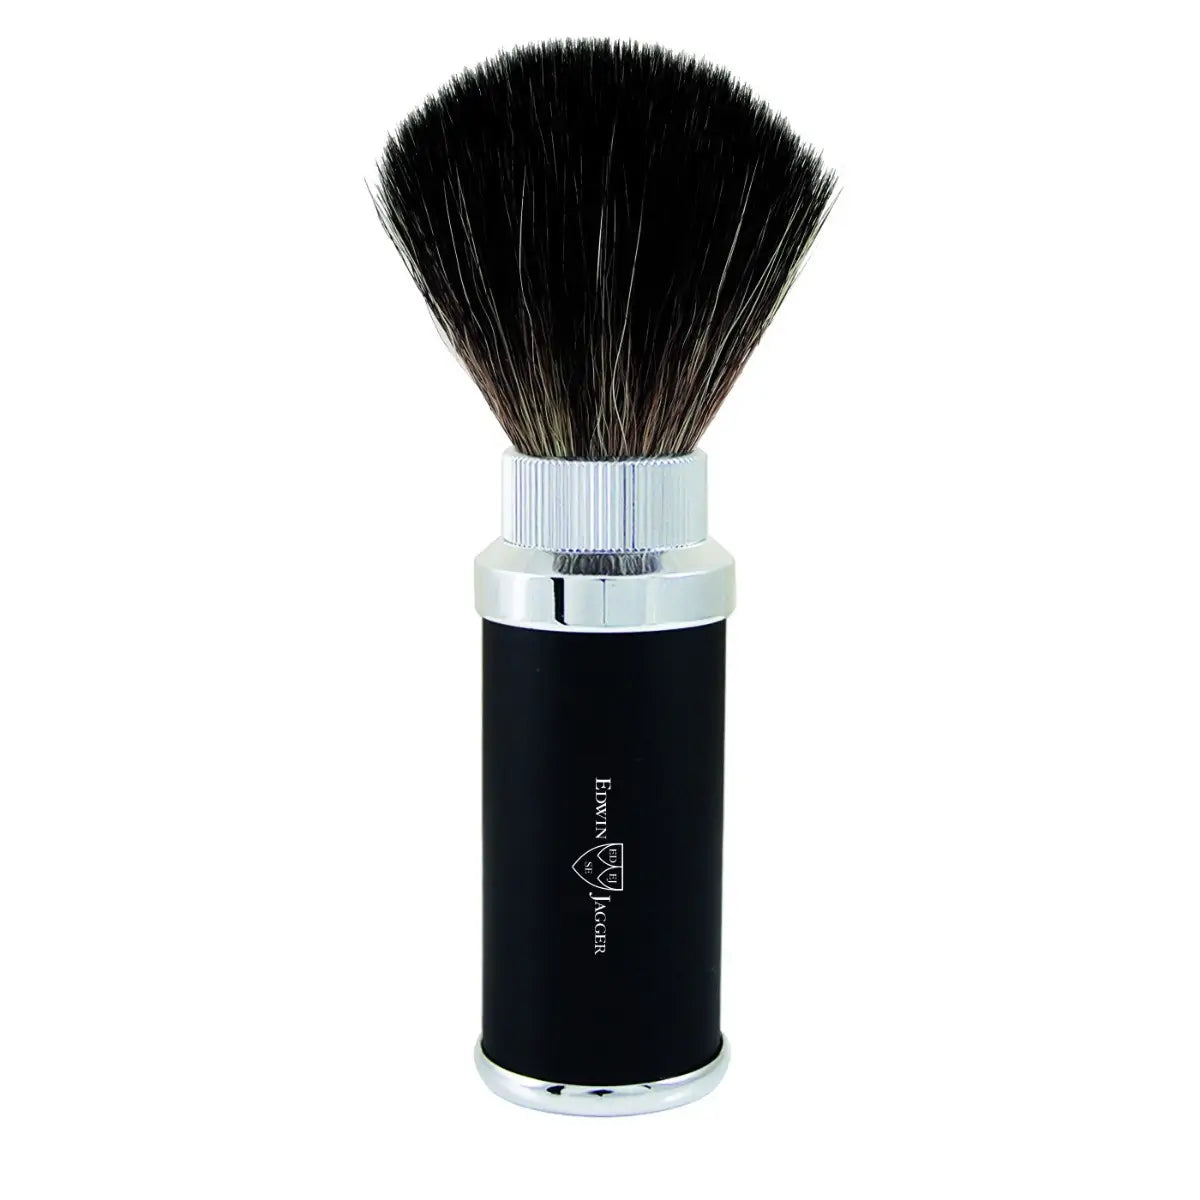 Edwin Jagger Black Travel Shaving Brush (Black Synthetic), 21M5296CR